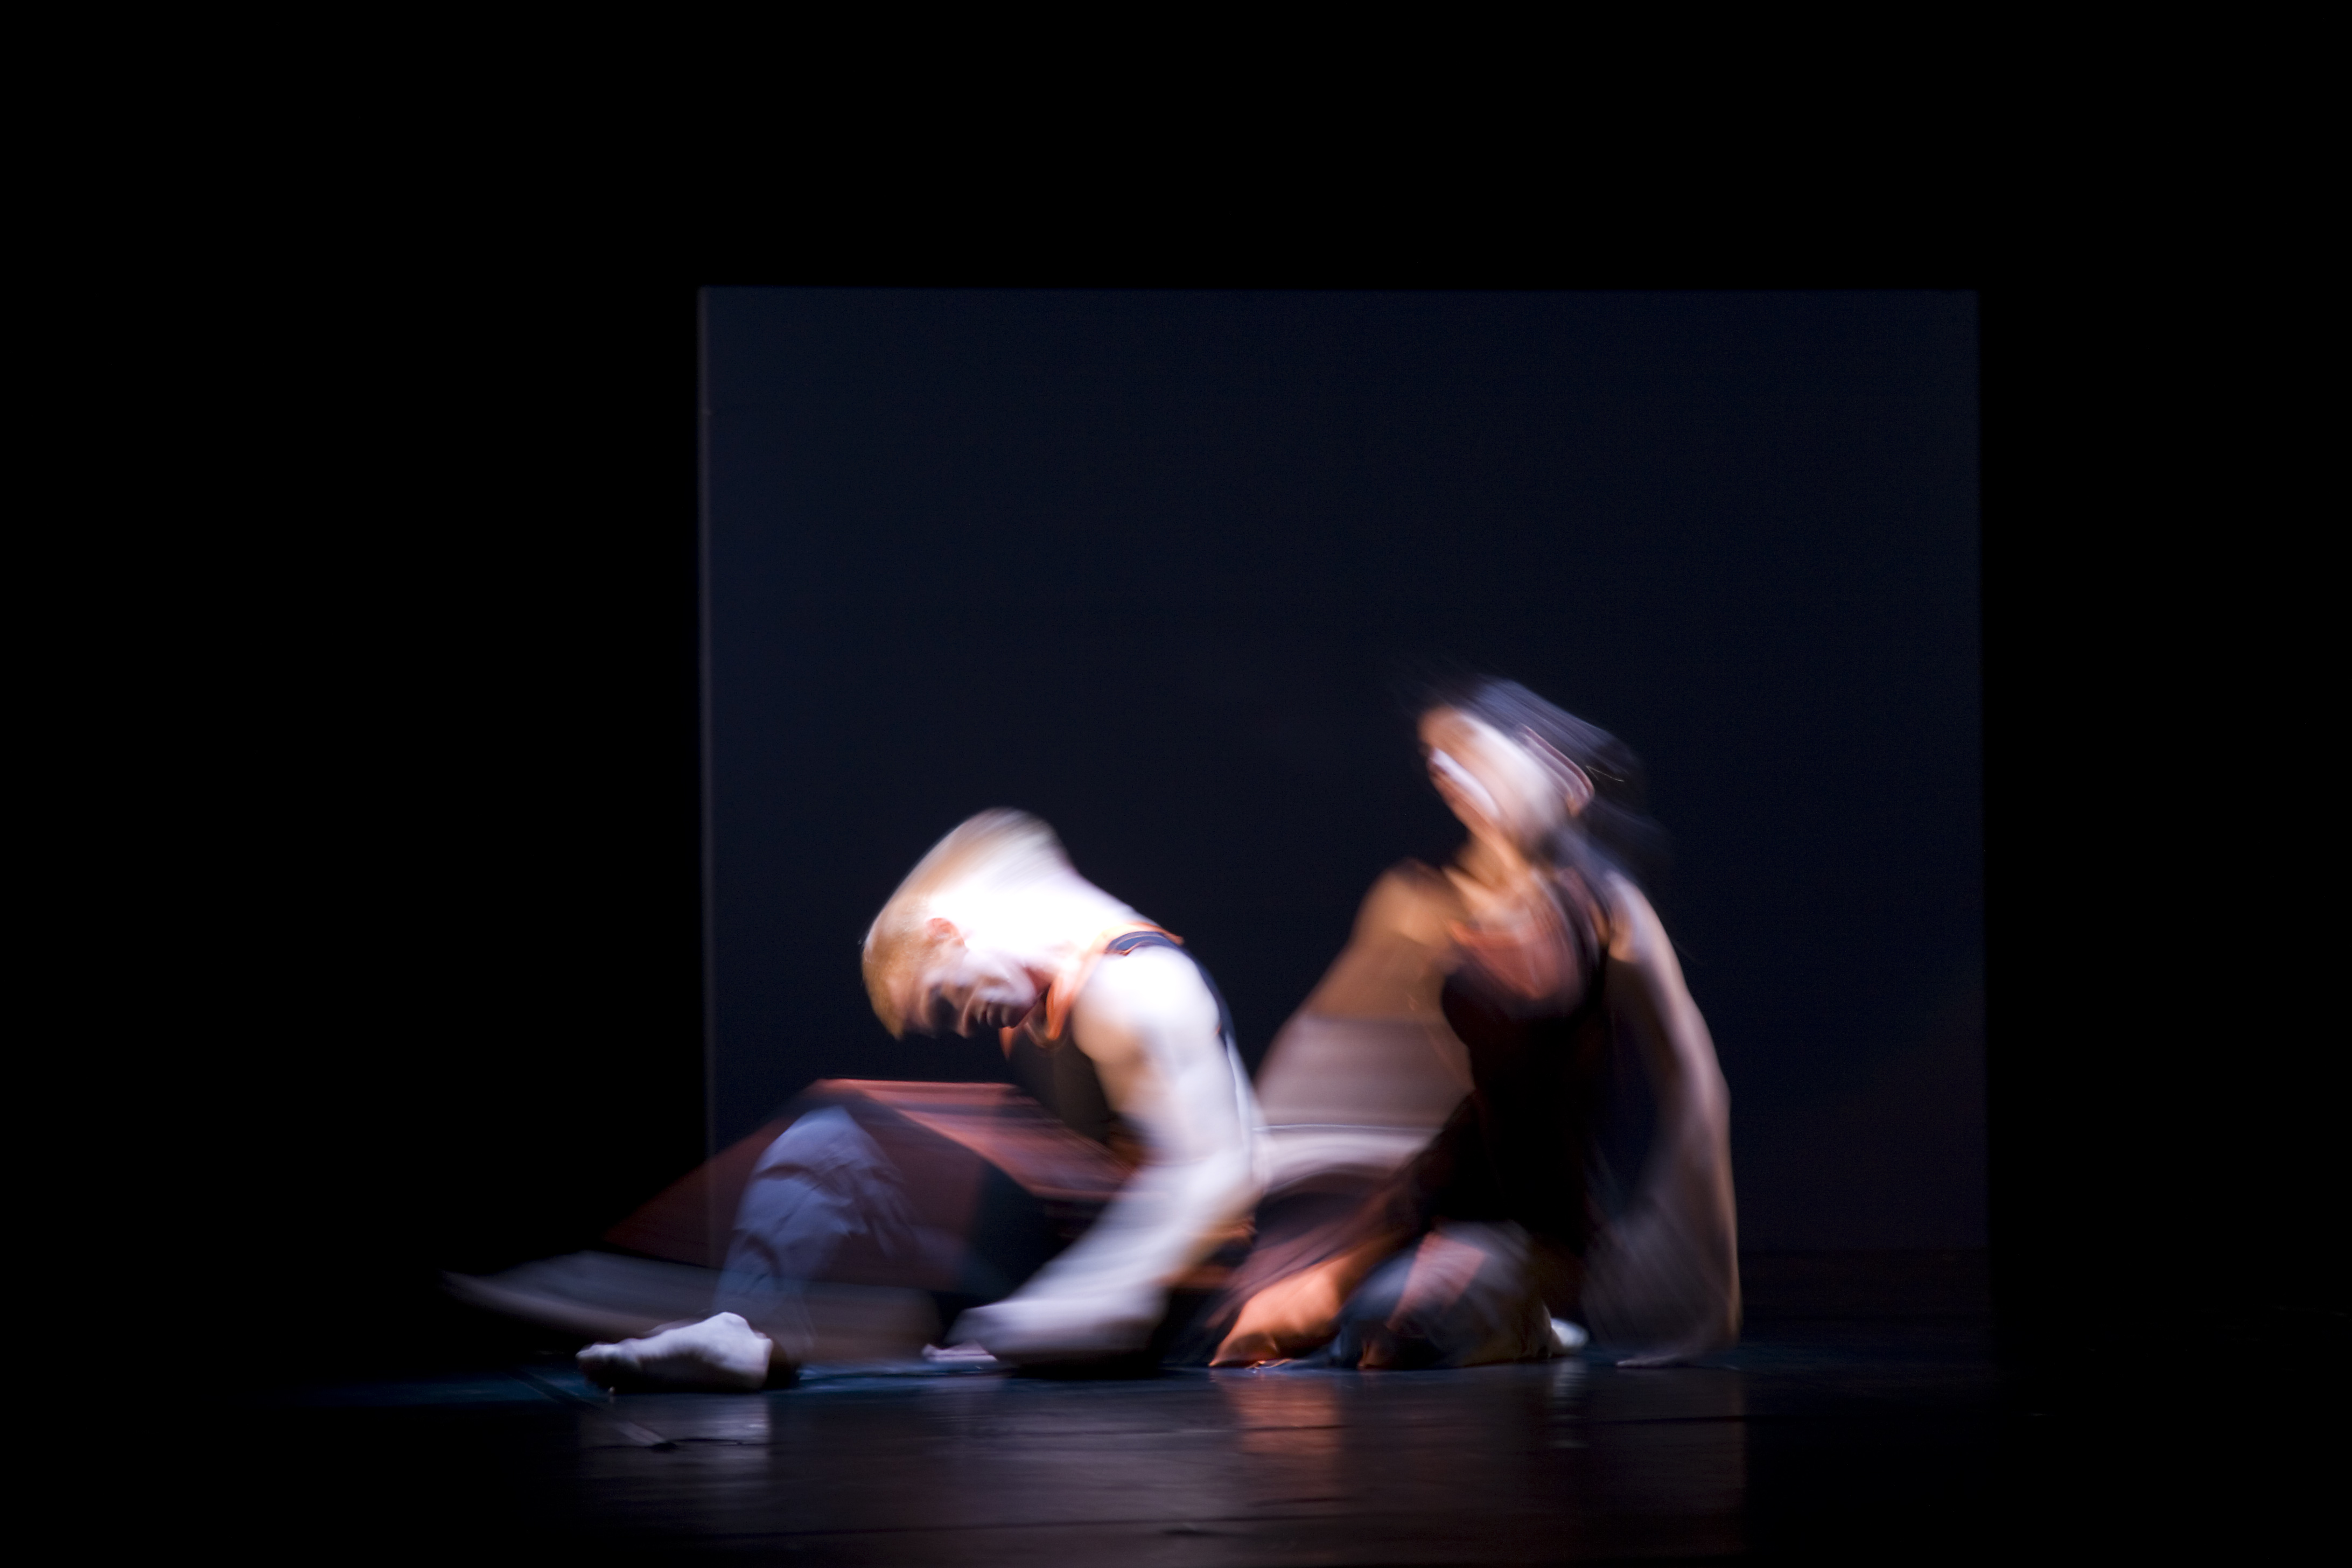 File:Munich - Two dancers captured in blurred movement - 7816.jpg ...